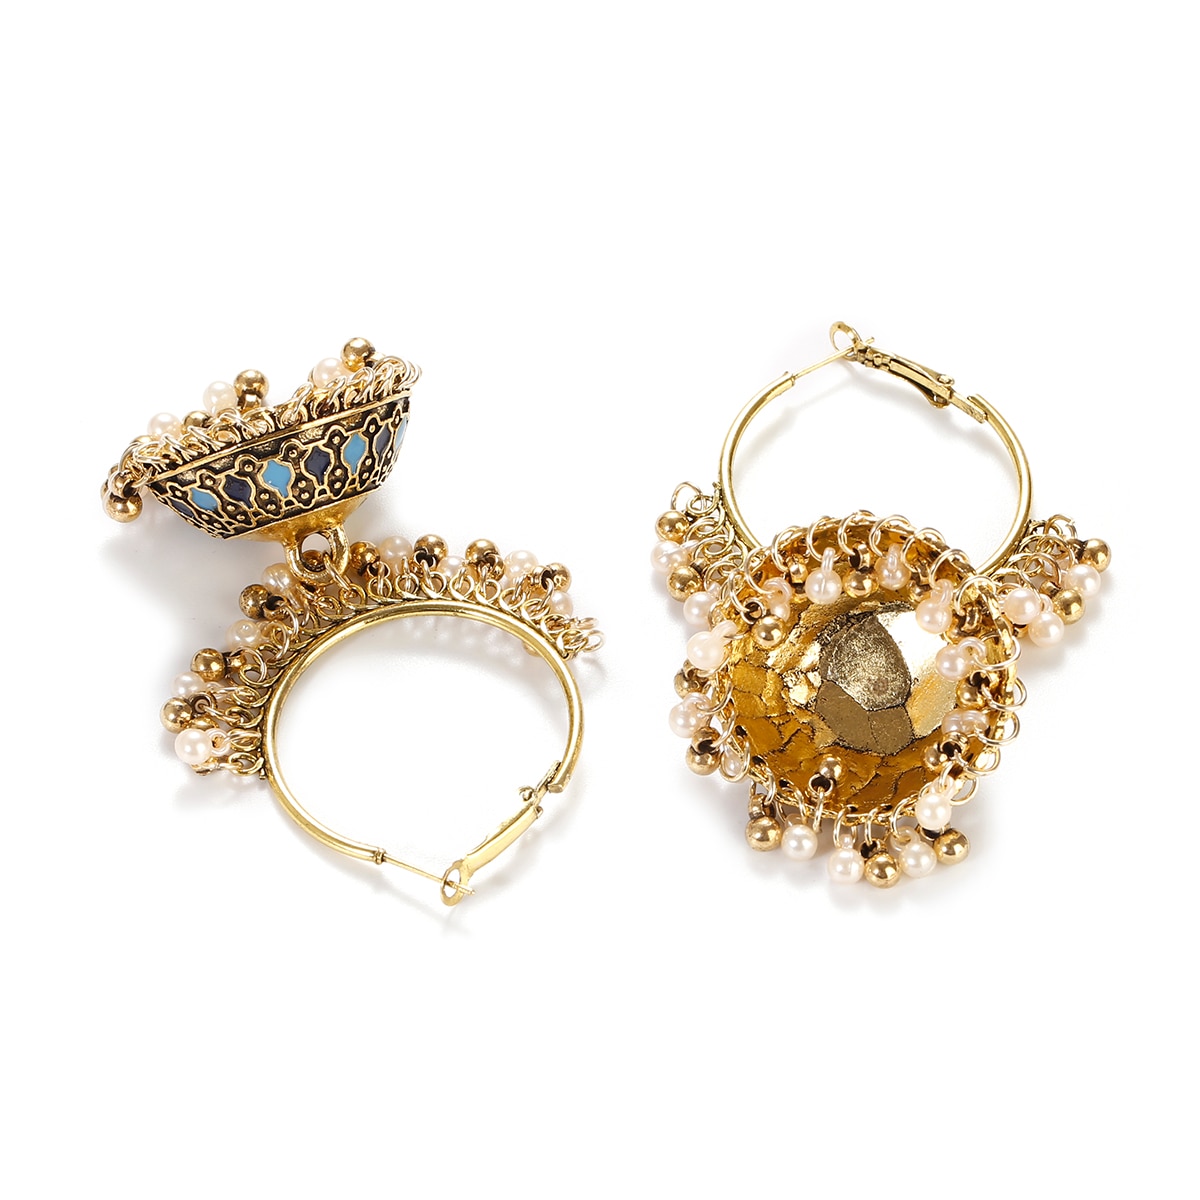 Pendientes-Gypsy-Ethnic-Round-Bells-Indian-Jewelry-Earrings-Vintage-Tribe-Jhumka-Earrings-Kolczyki-W-1005003814363276-4